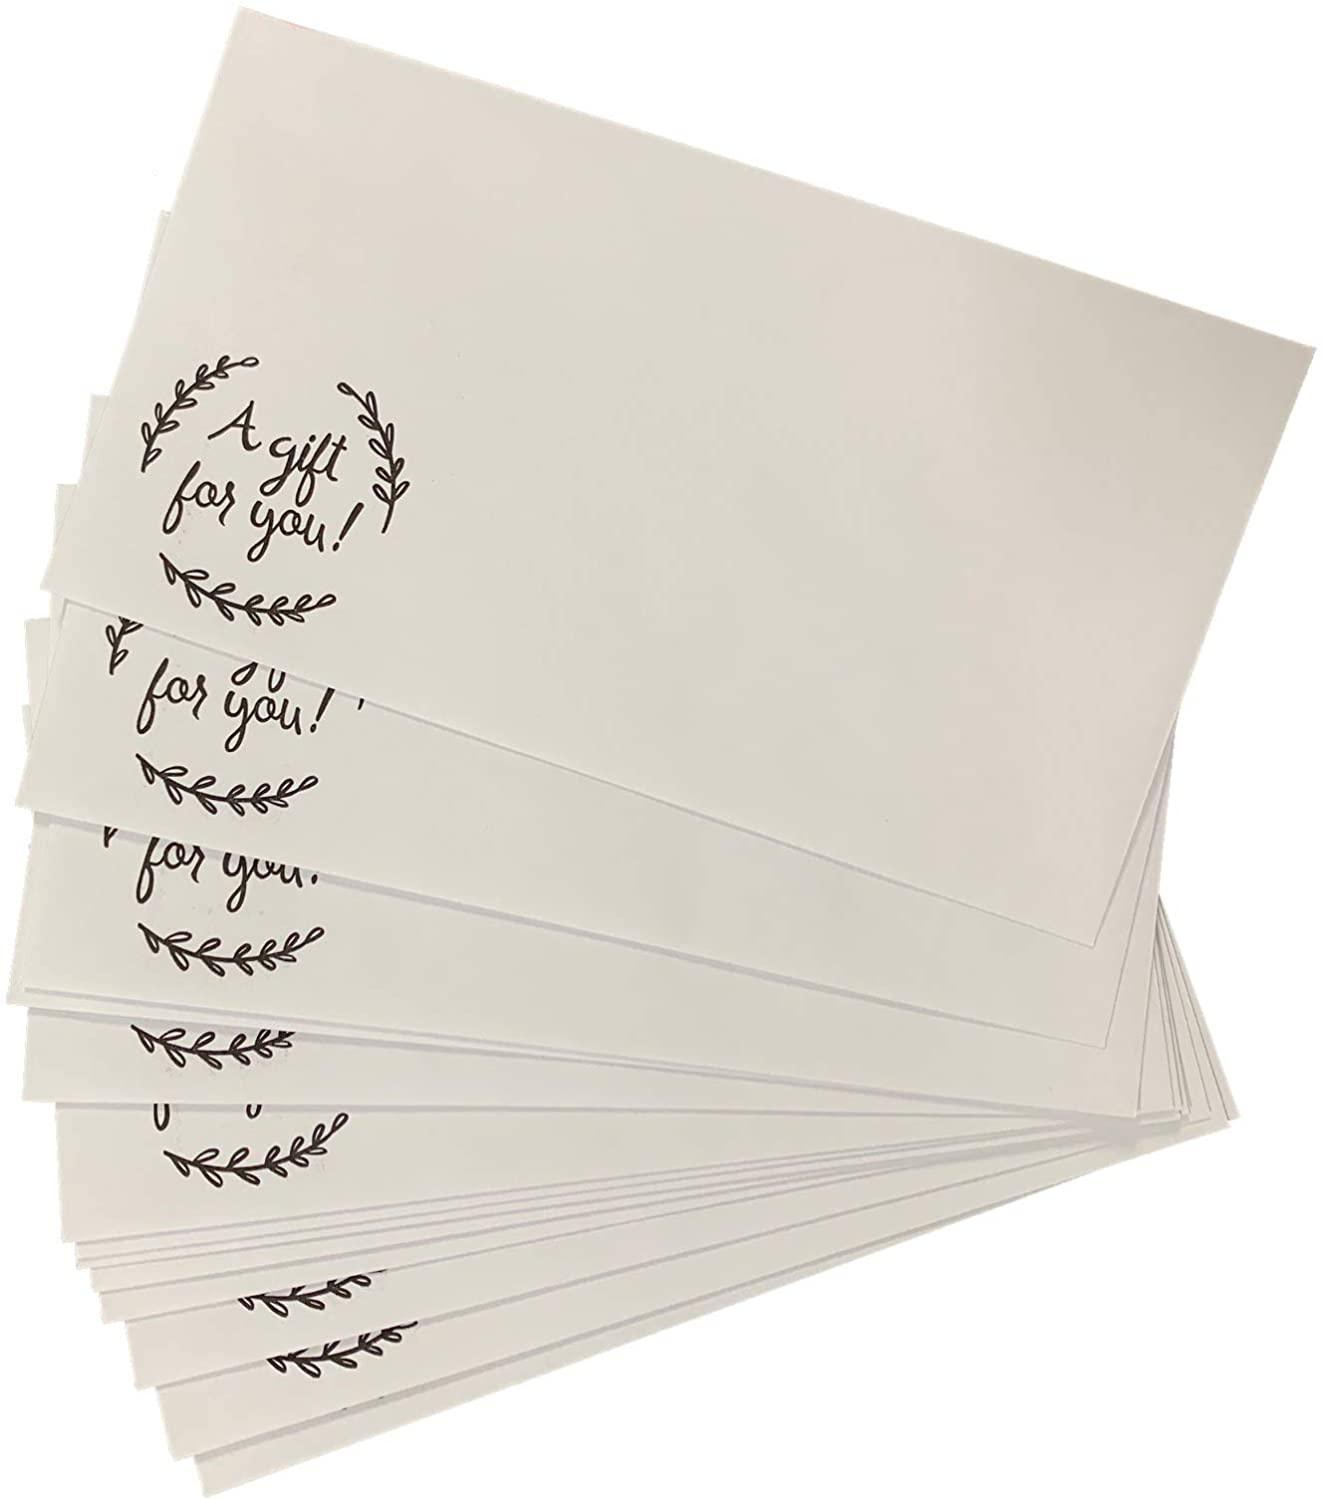 Buy beautifully printed cash envelopes from SJPrinter Store